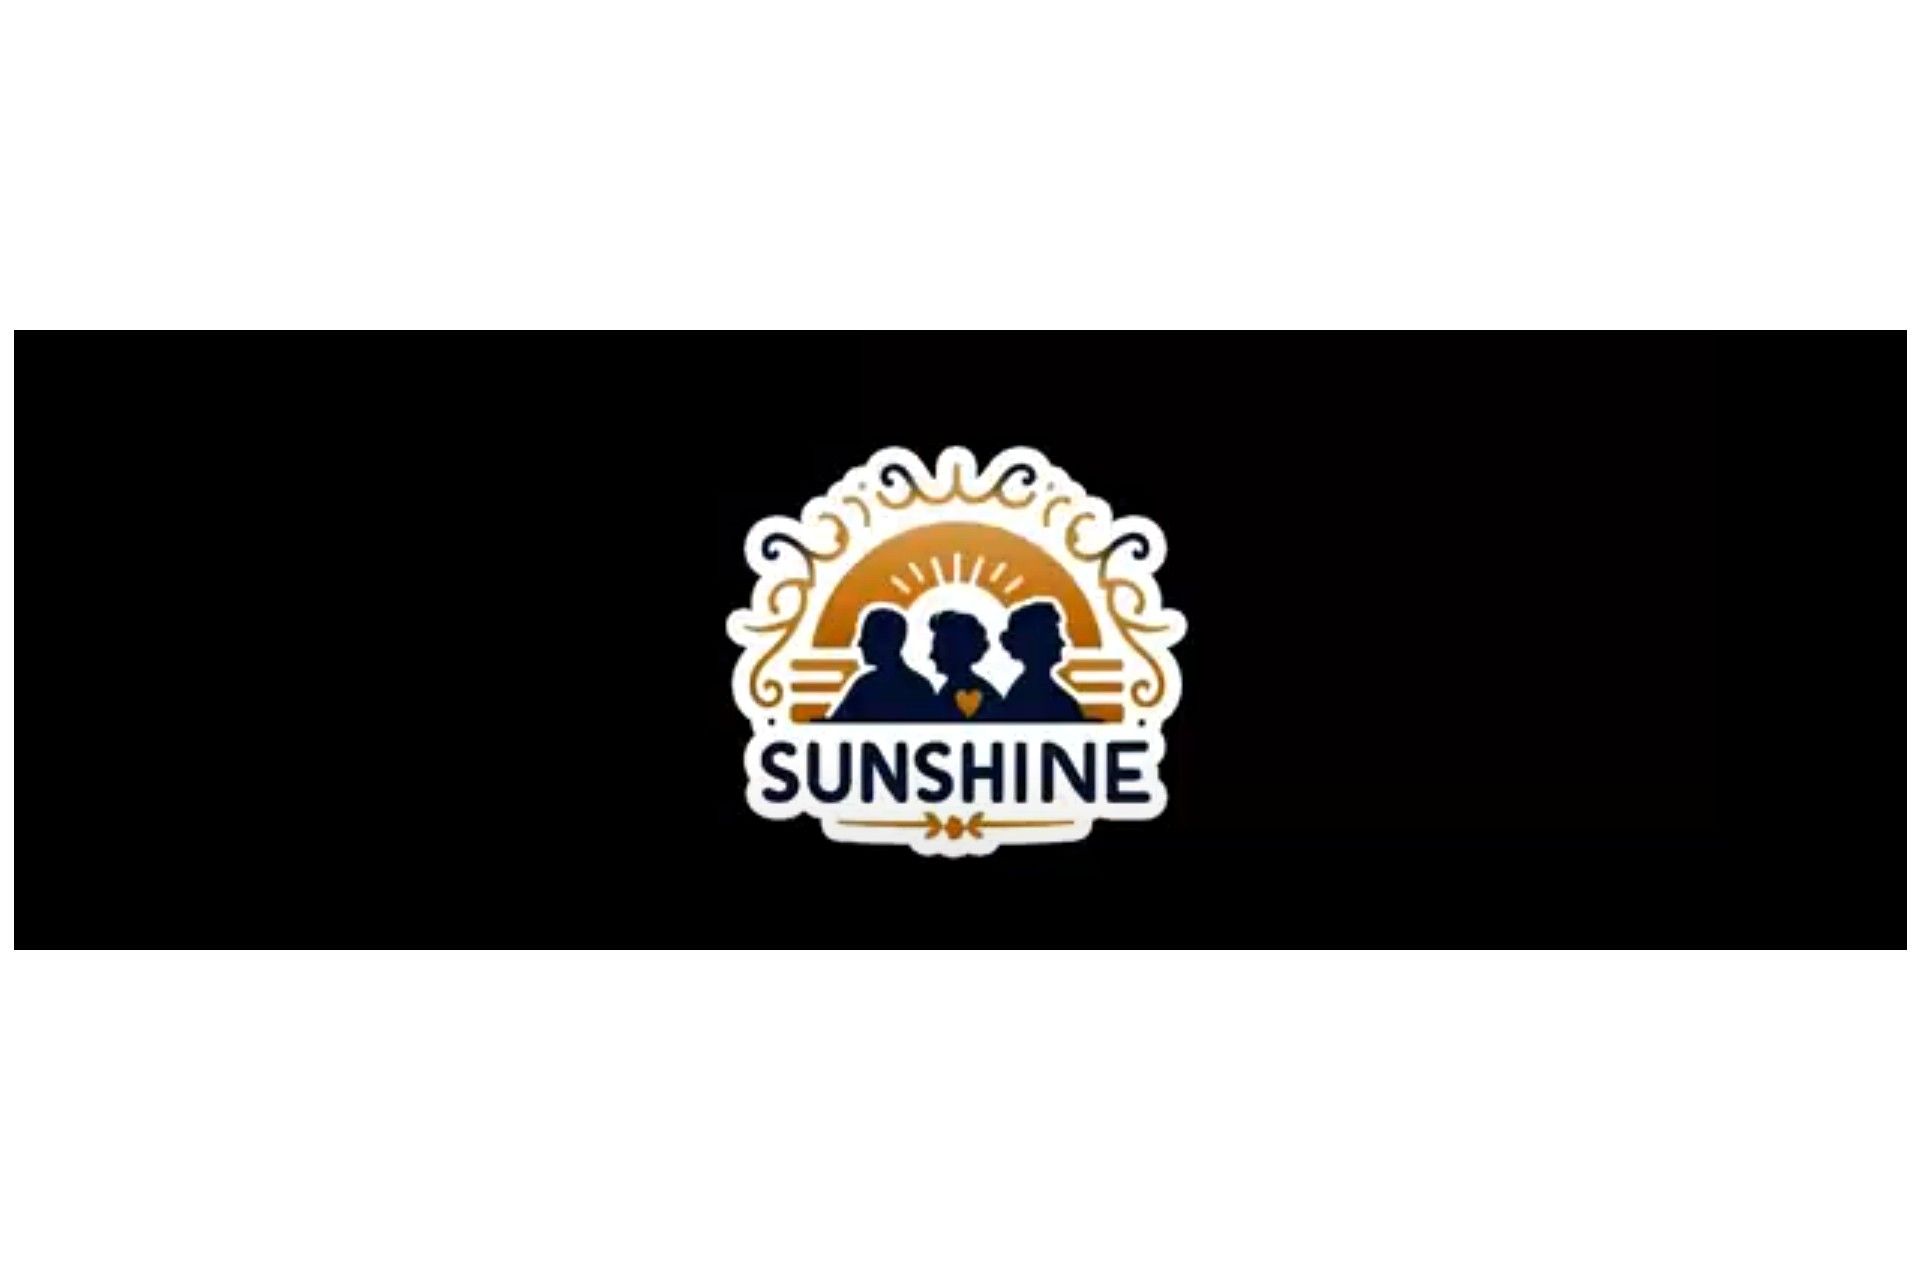 Sunshine logo crowdfunding